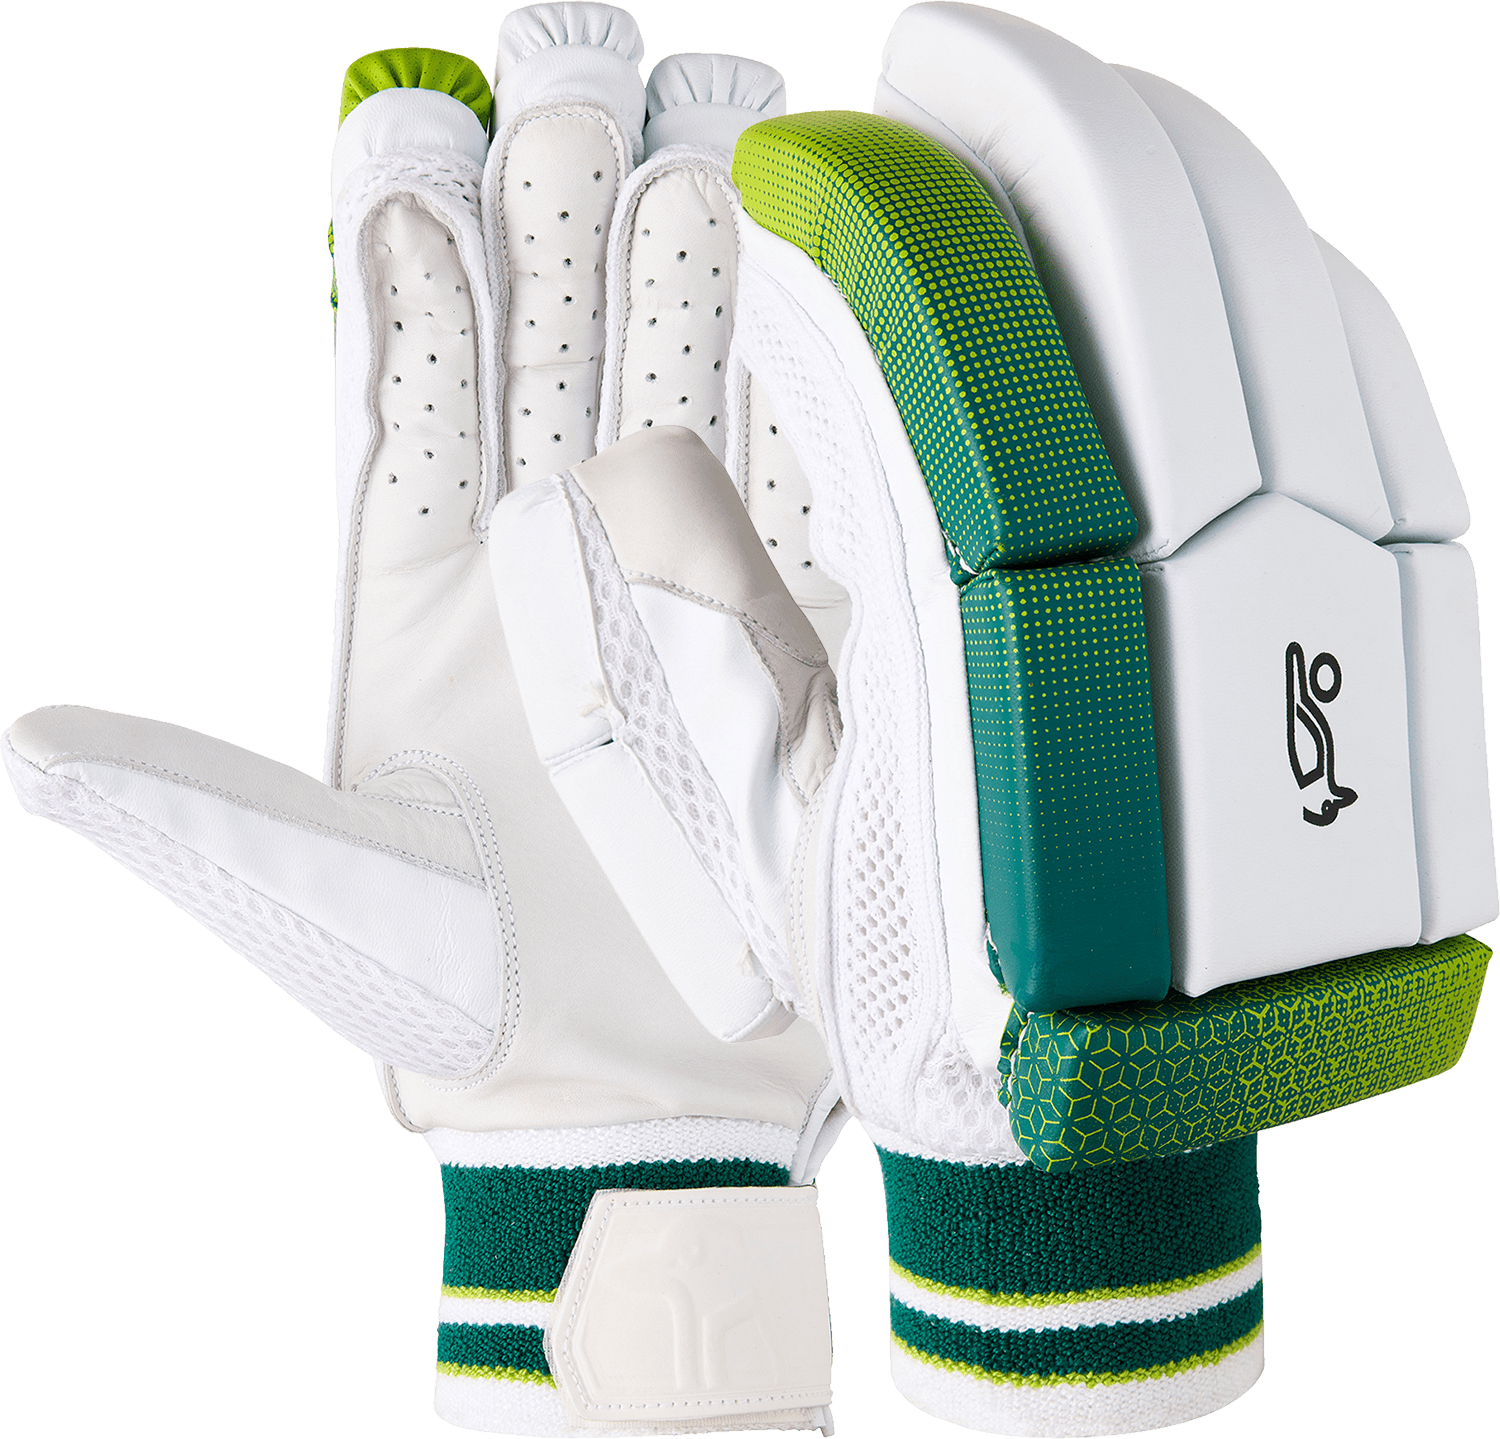 Cricket Batting Gloves Kahuna 600 By Kookaburra